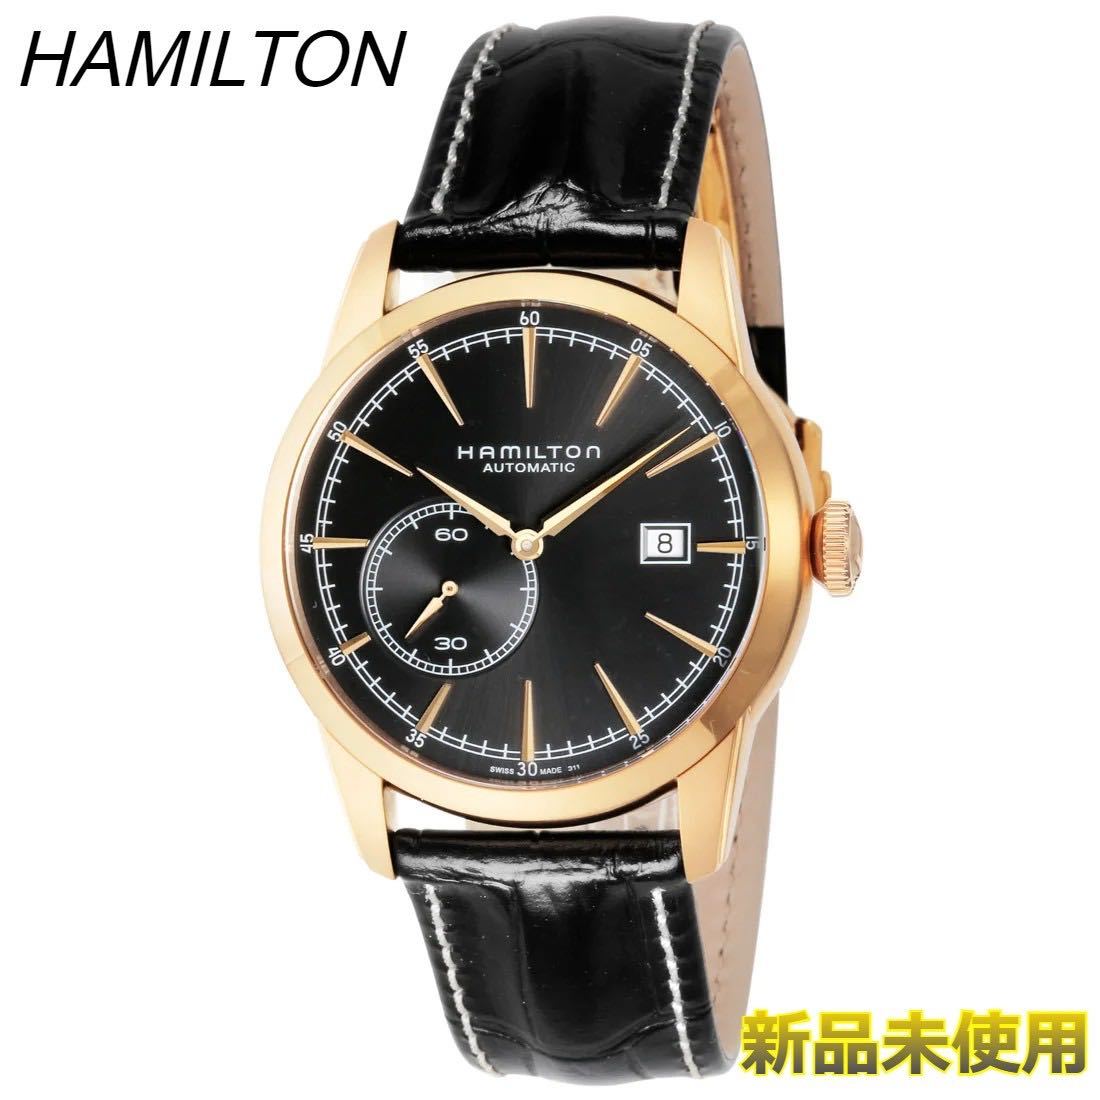 HAMILTON】【安心返品保証】【新品未使用】腕時計 H80405865 送料無料